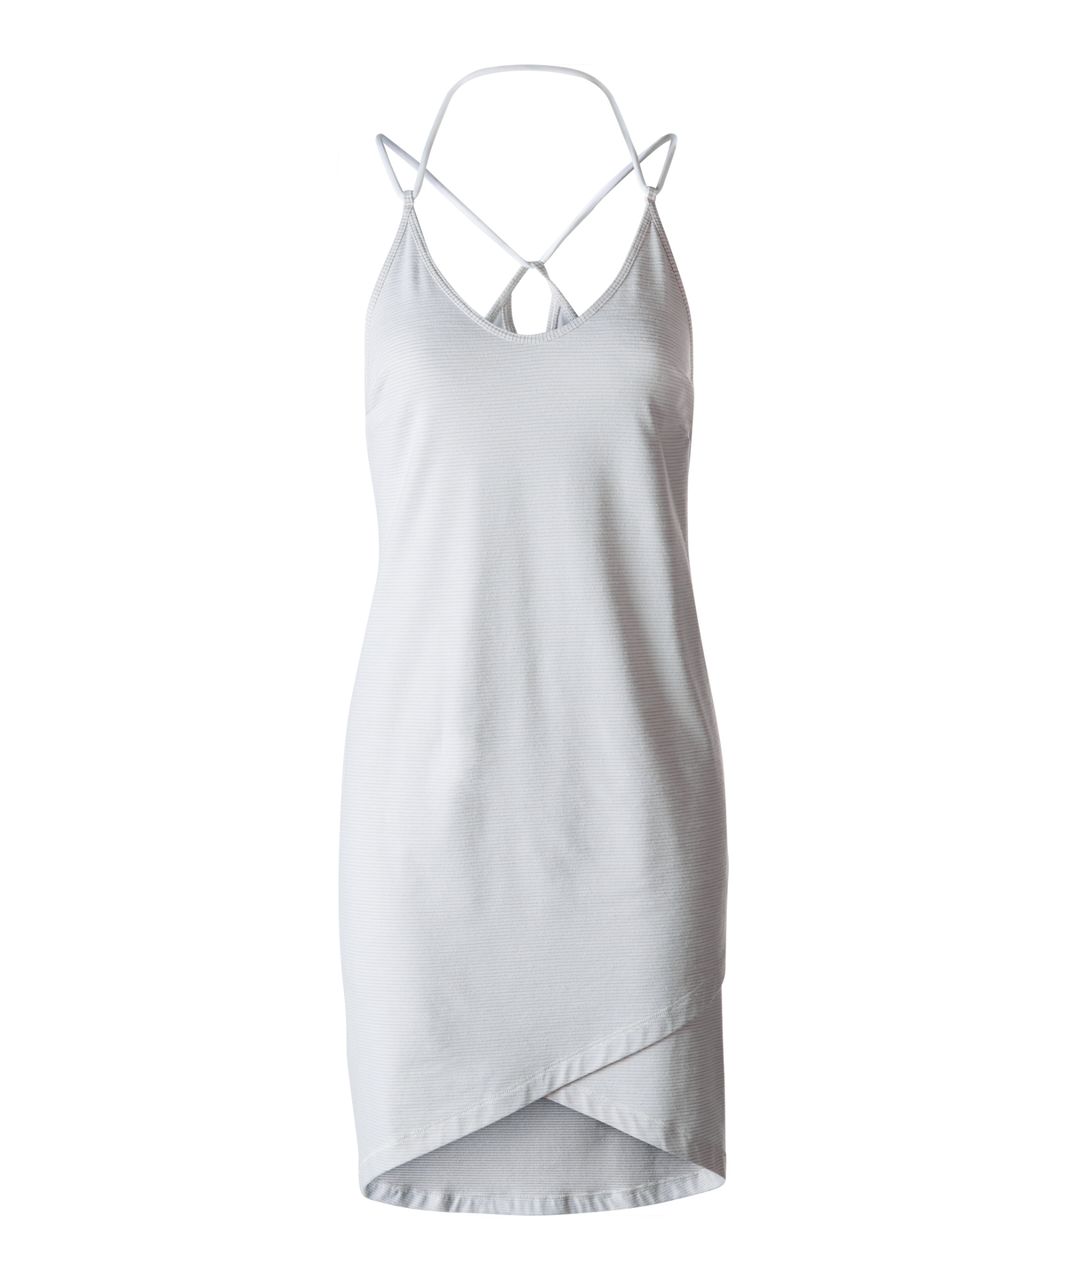 Lululemon Just Chillin Dress - Heathered White / White